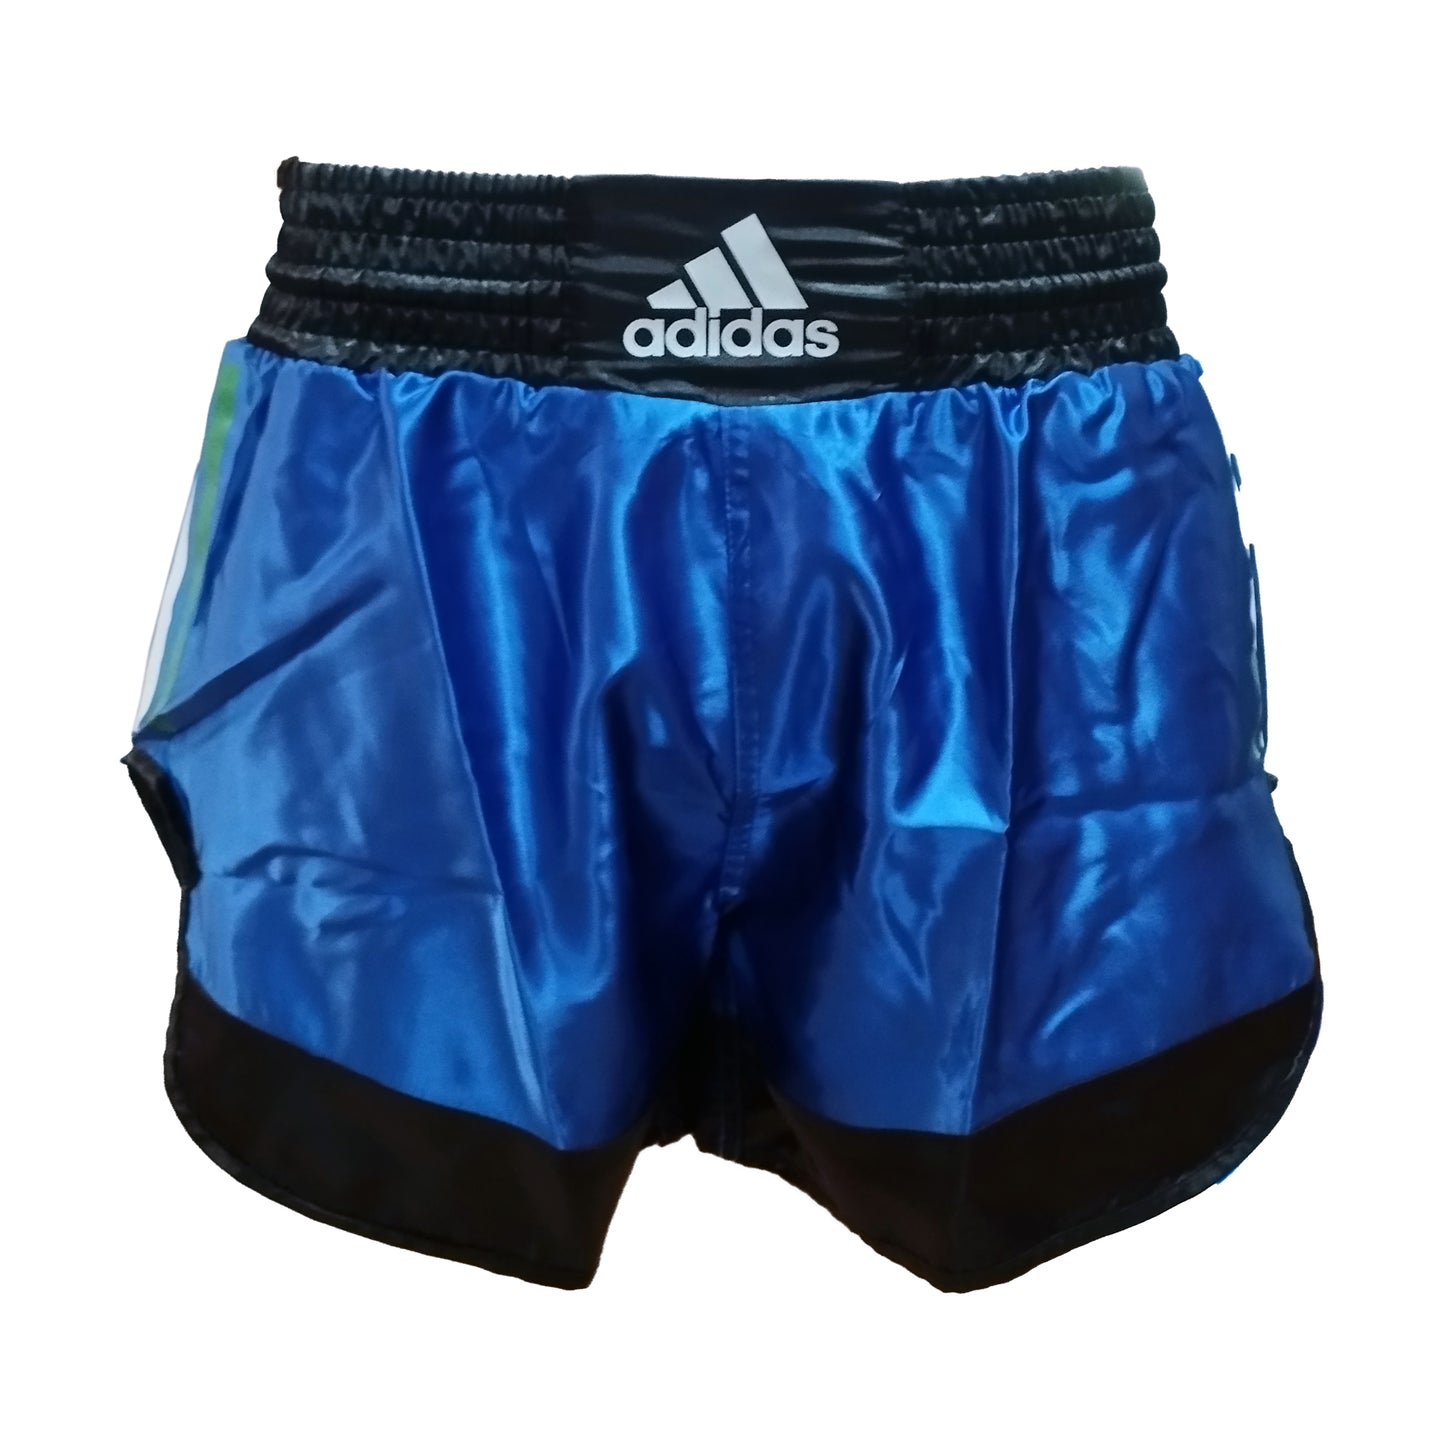 Adidas - Shorts MMA Pantaloncini Kick Boxing Full Contact Muay Thai ITA - Punto Fitness